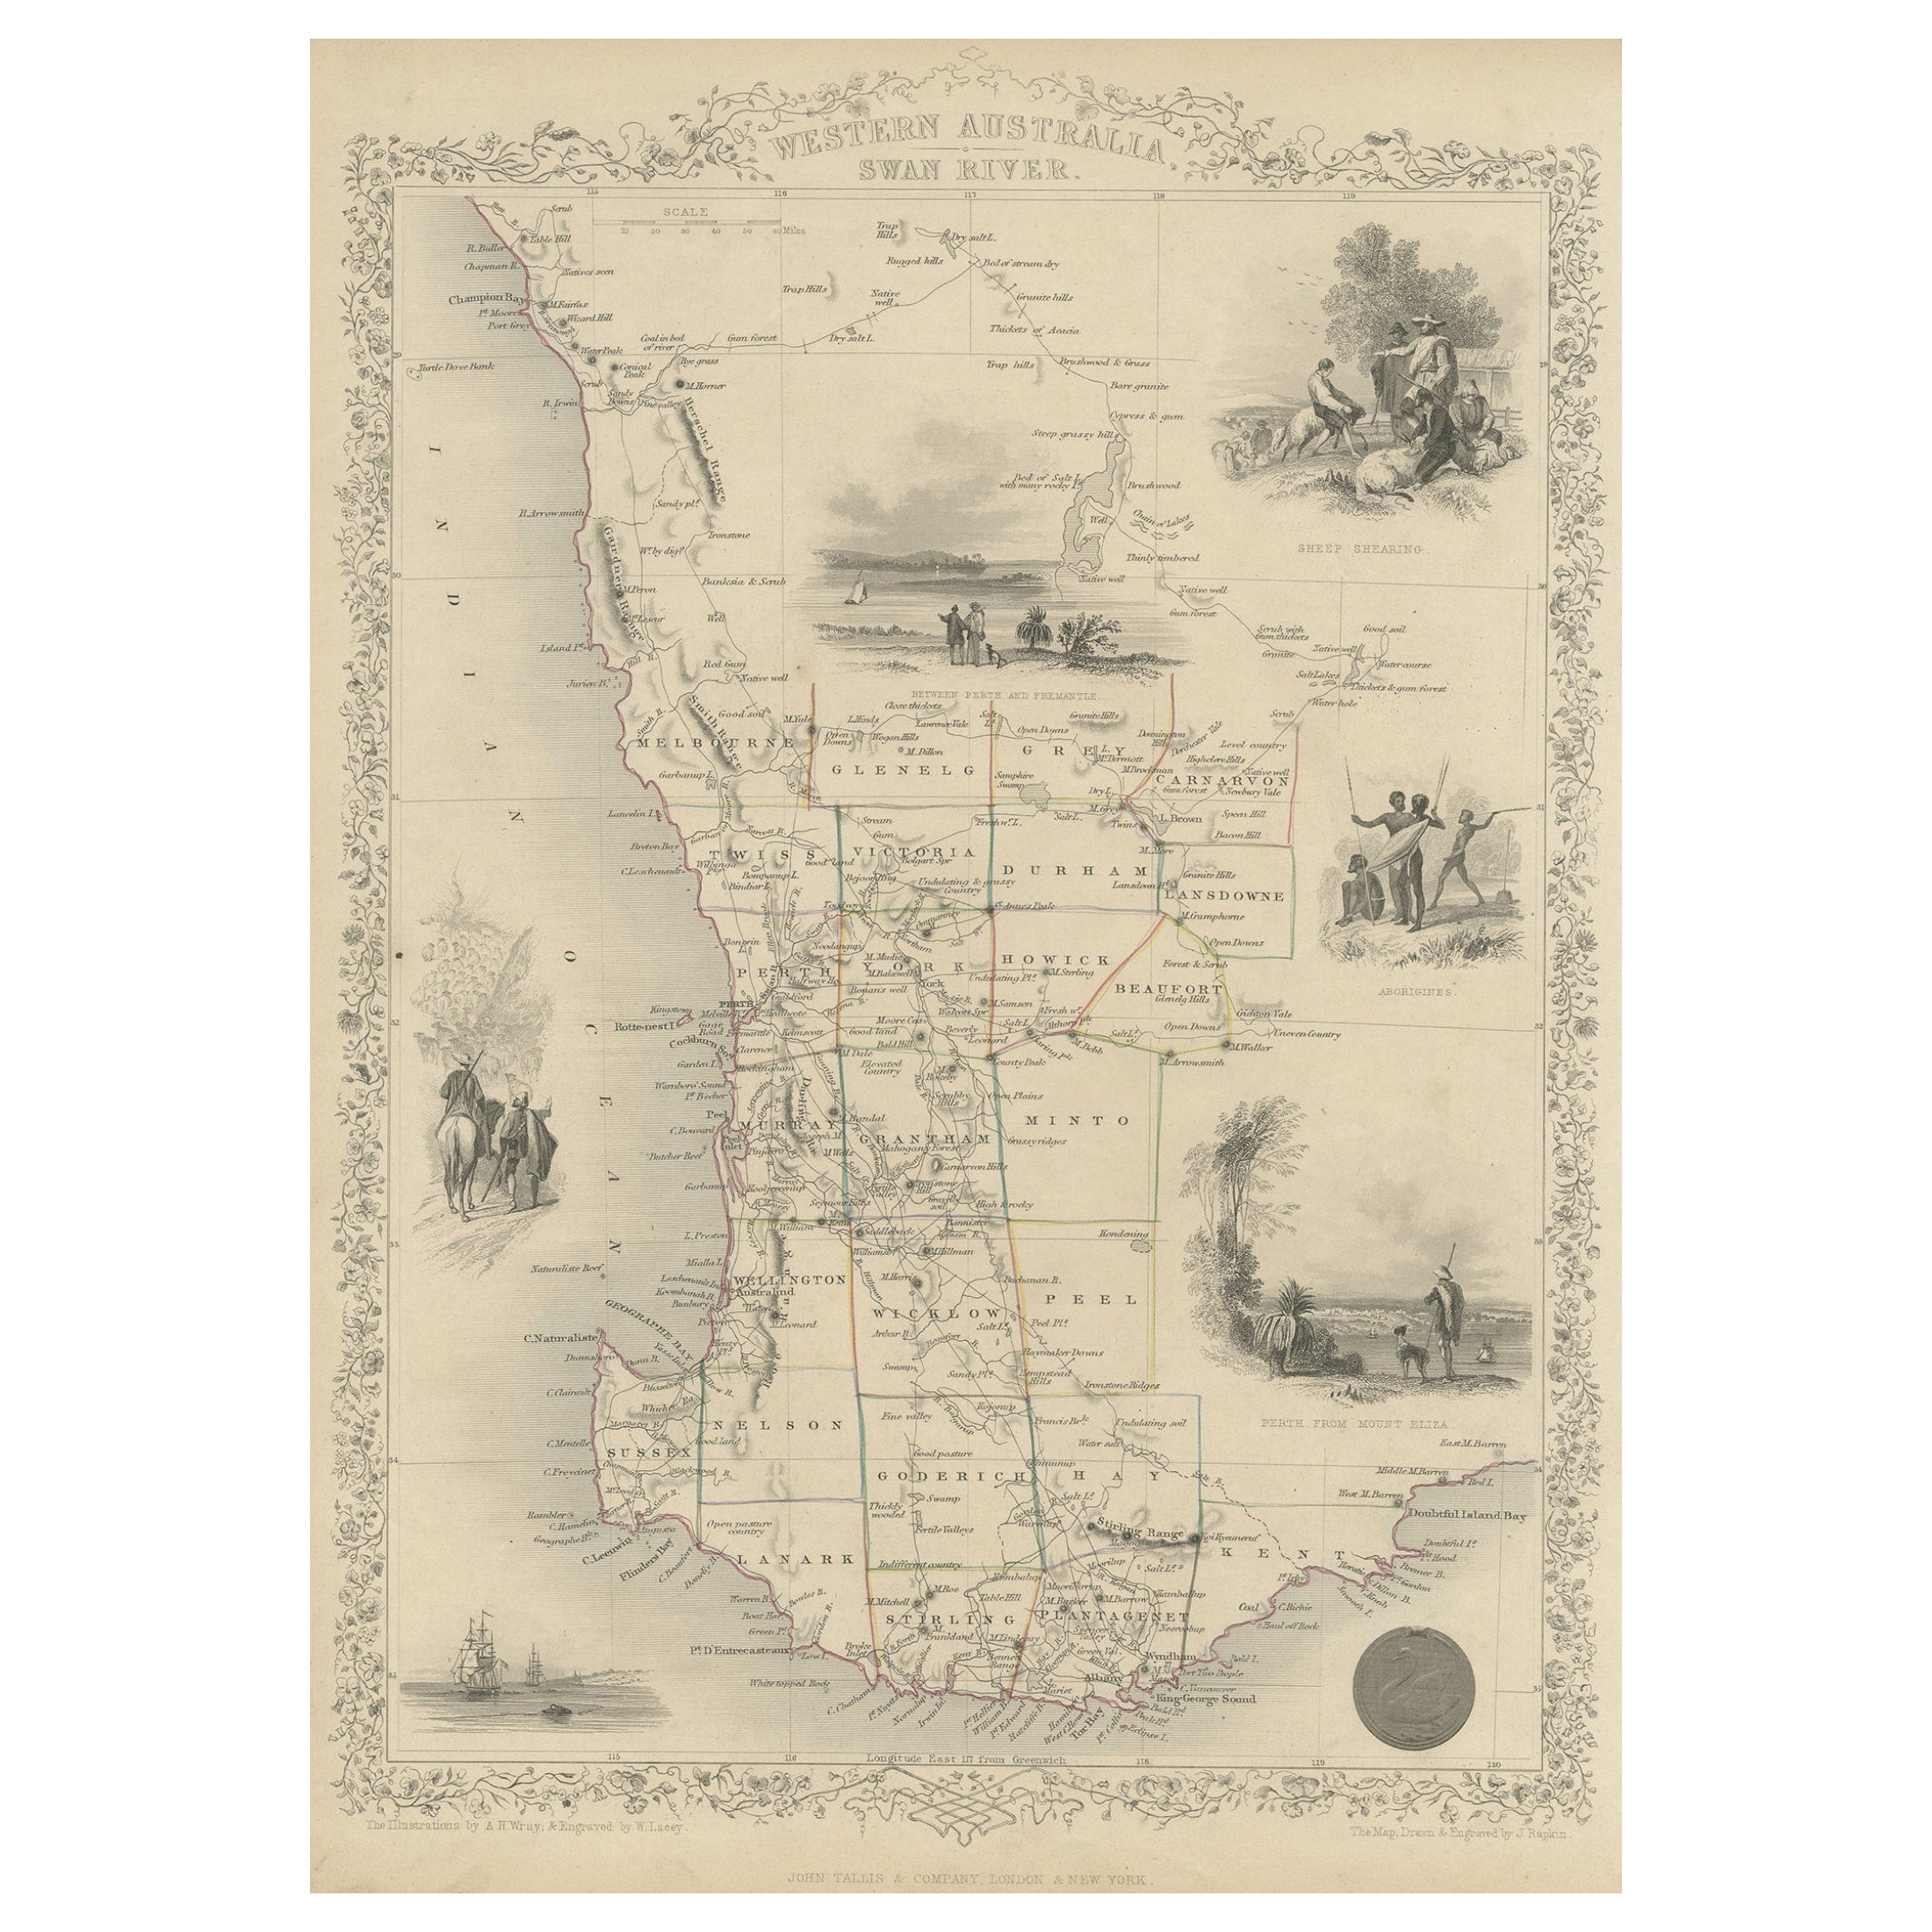 Map of Western Australia & Swan River, insets of Perth, Aboriginals, Sheep, 1851